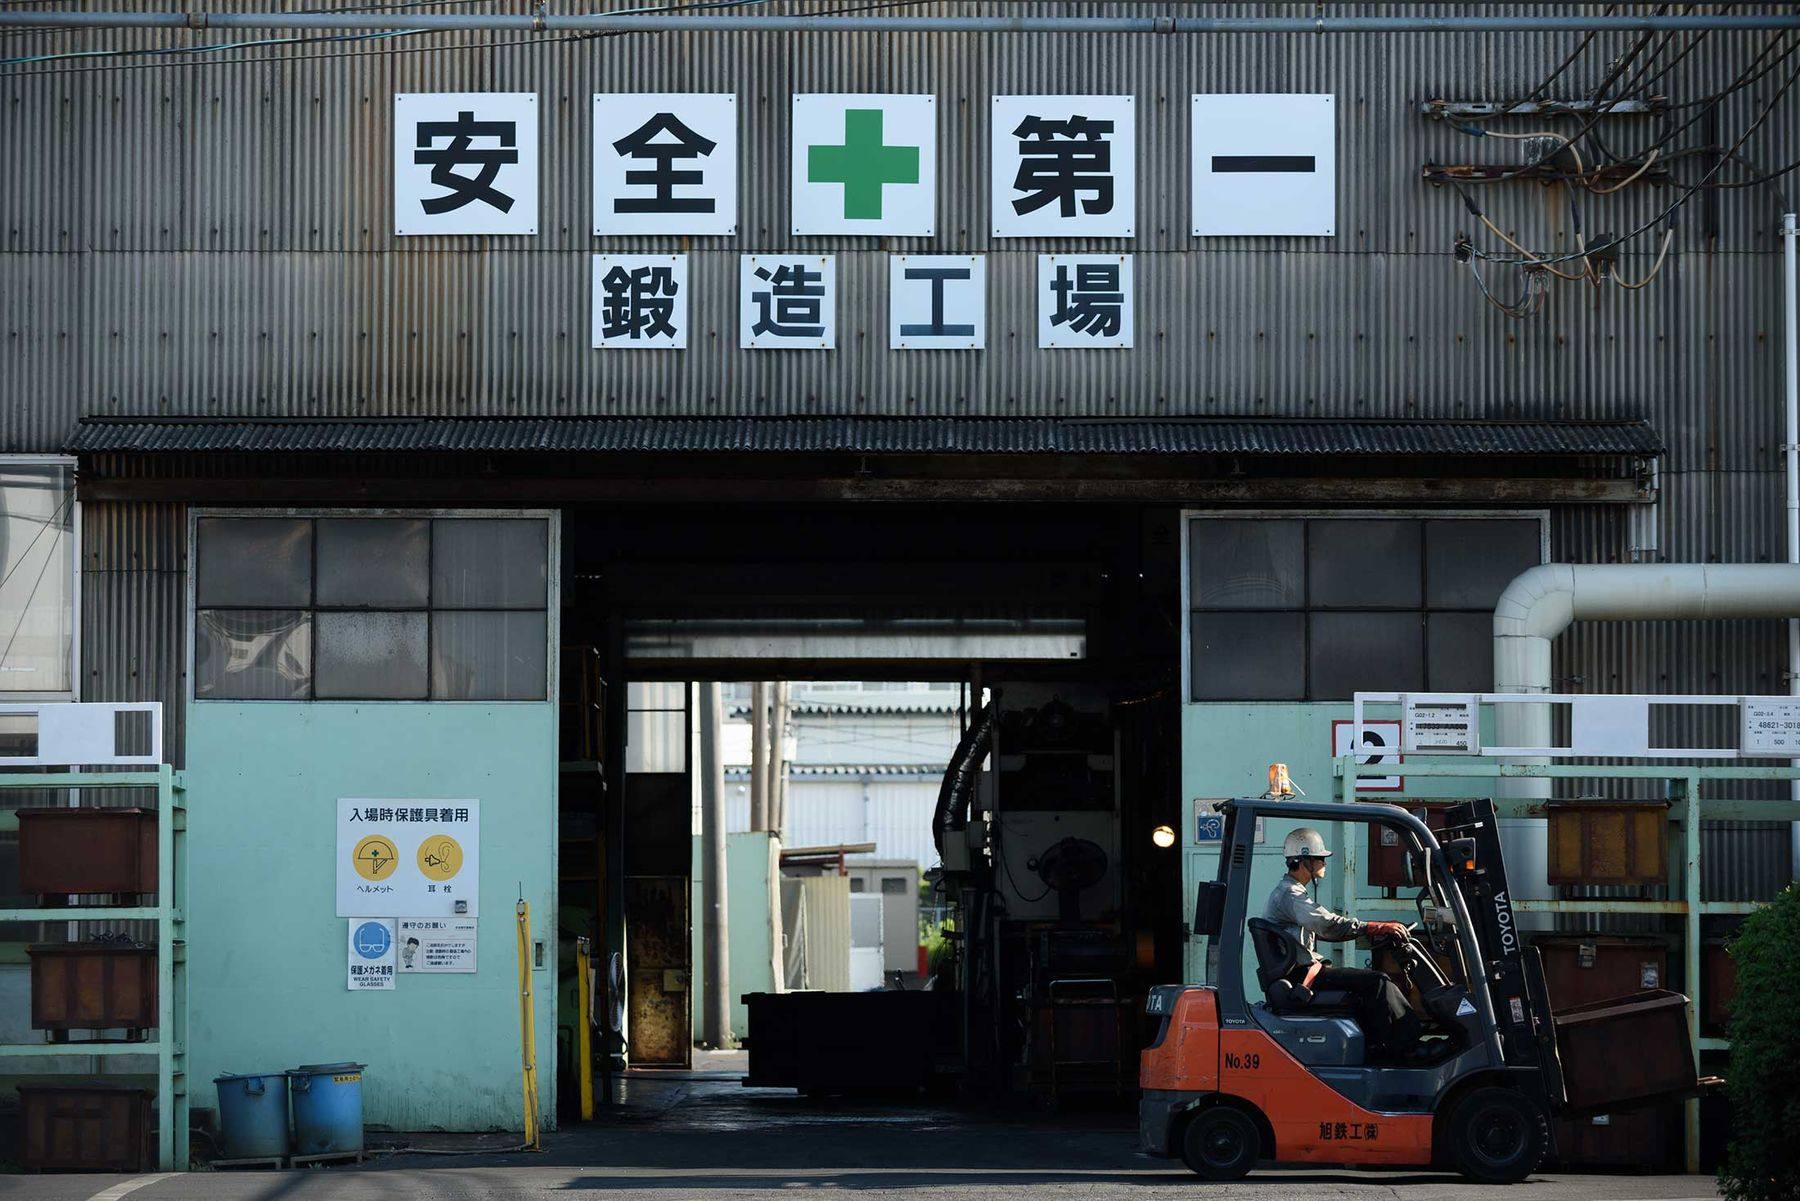 爱知县的Asahi Tekko Co.工厂。摄影师：AKIO KON / BLOOMBERG